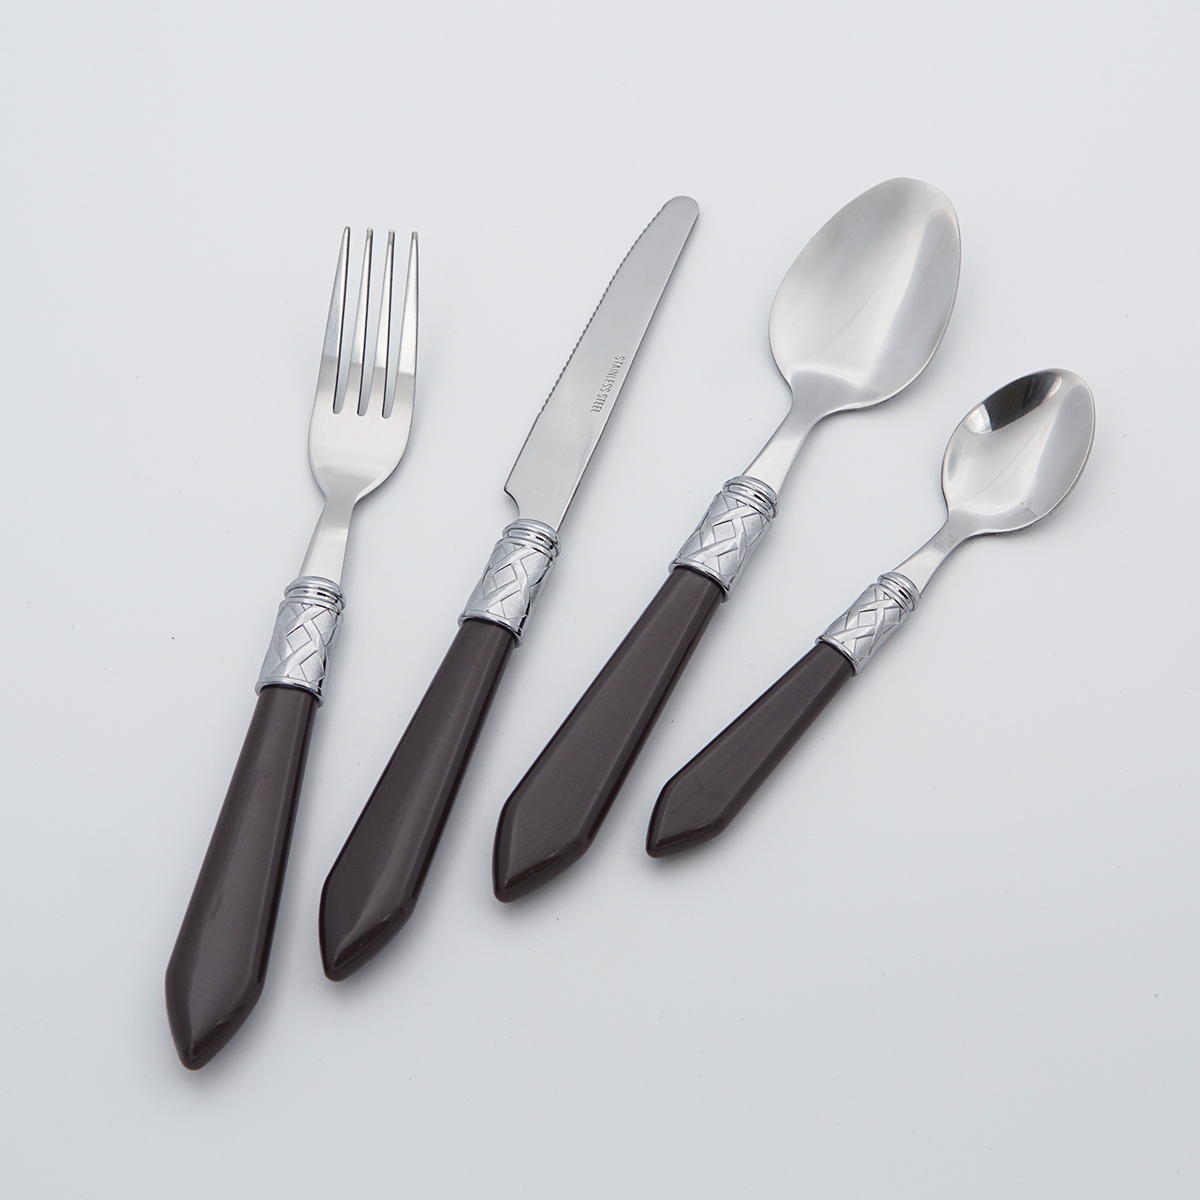 Wholesale Food Grade Flatware Stainless Steel Cutlery Plastic Handle Mirror Polish Silverware Set for Restaurant Hotel